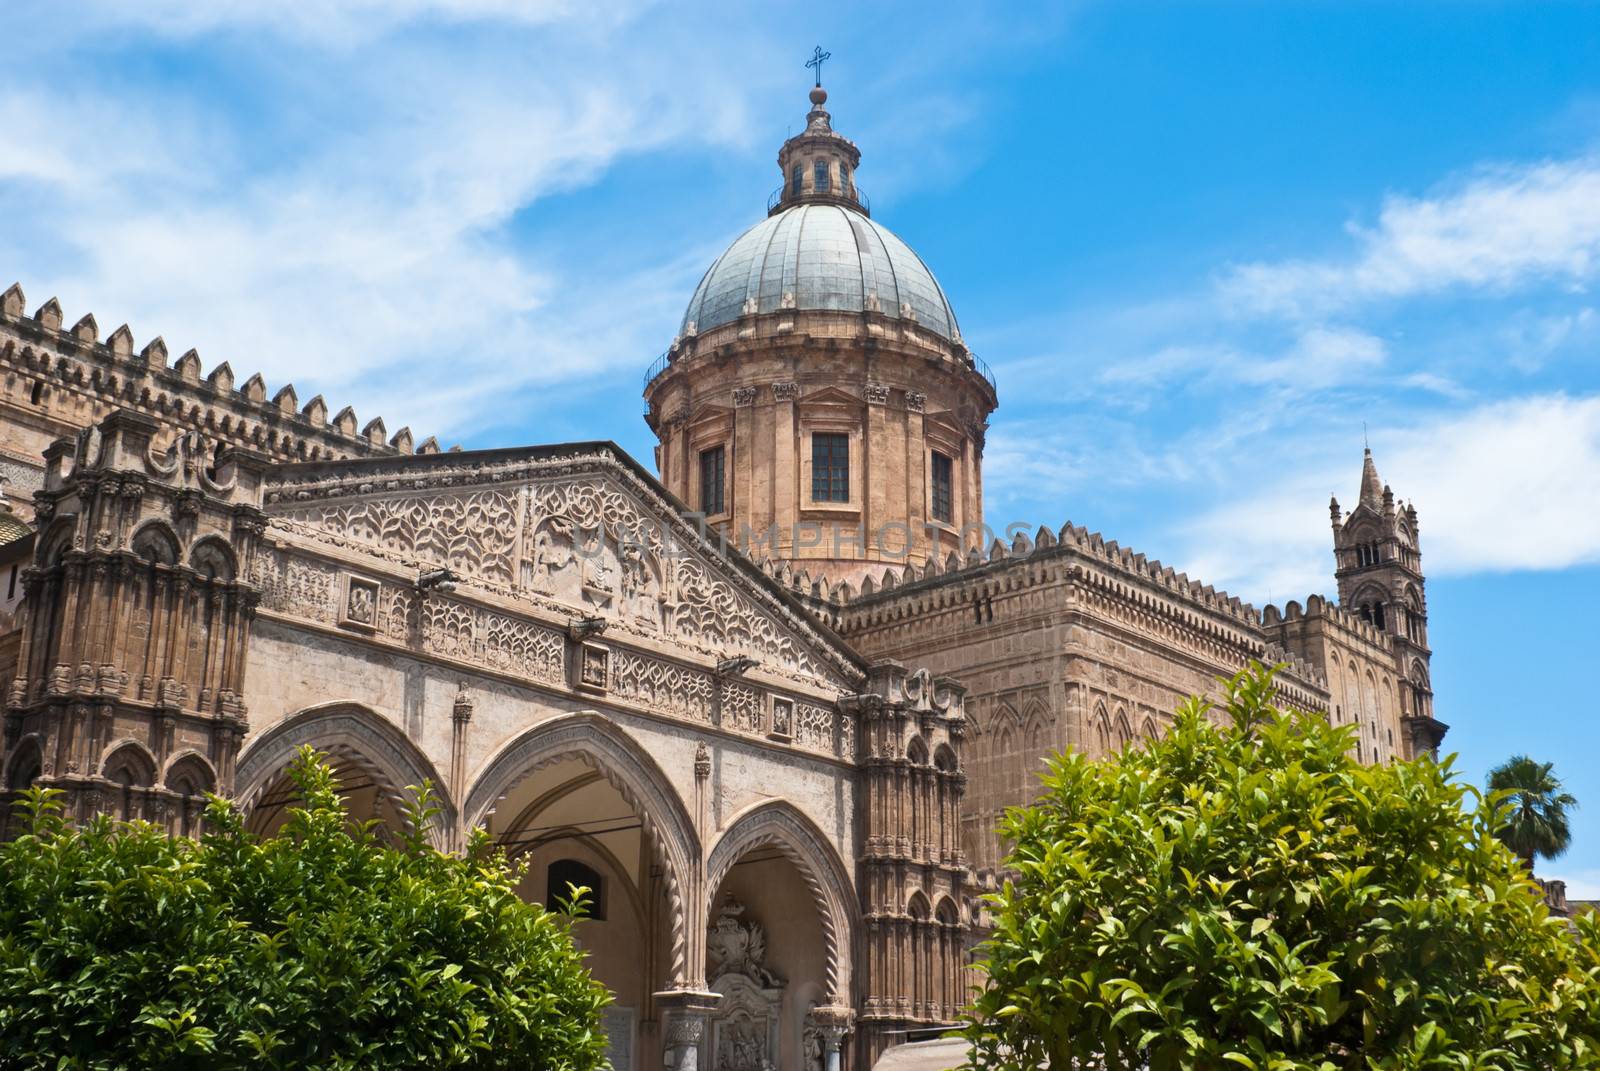 Cathedral of Palermo. Sicily. Italy by gandolfocannatella